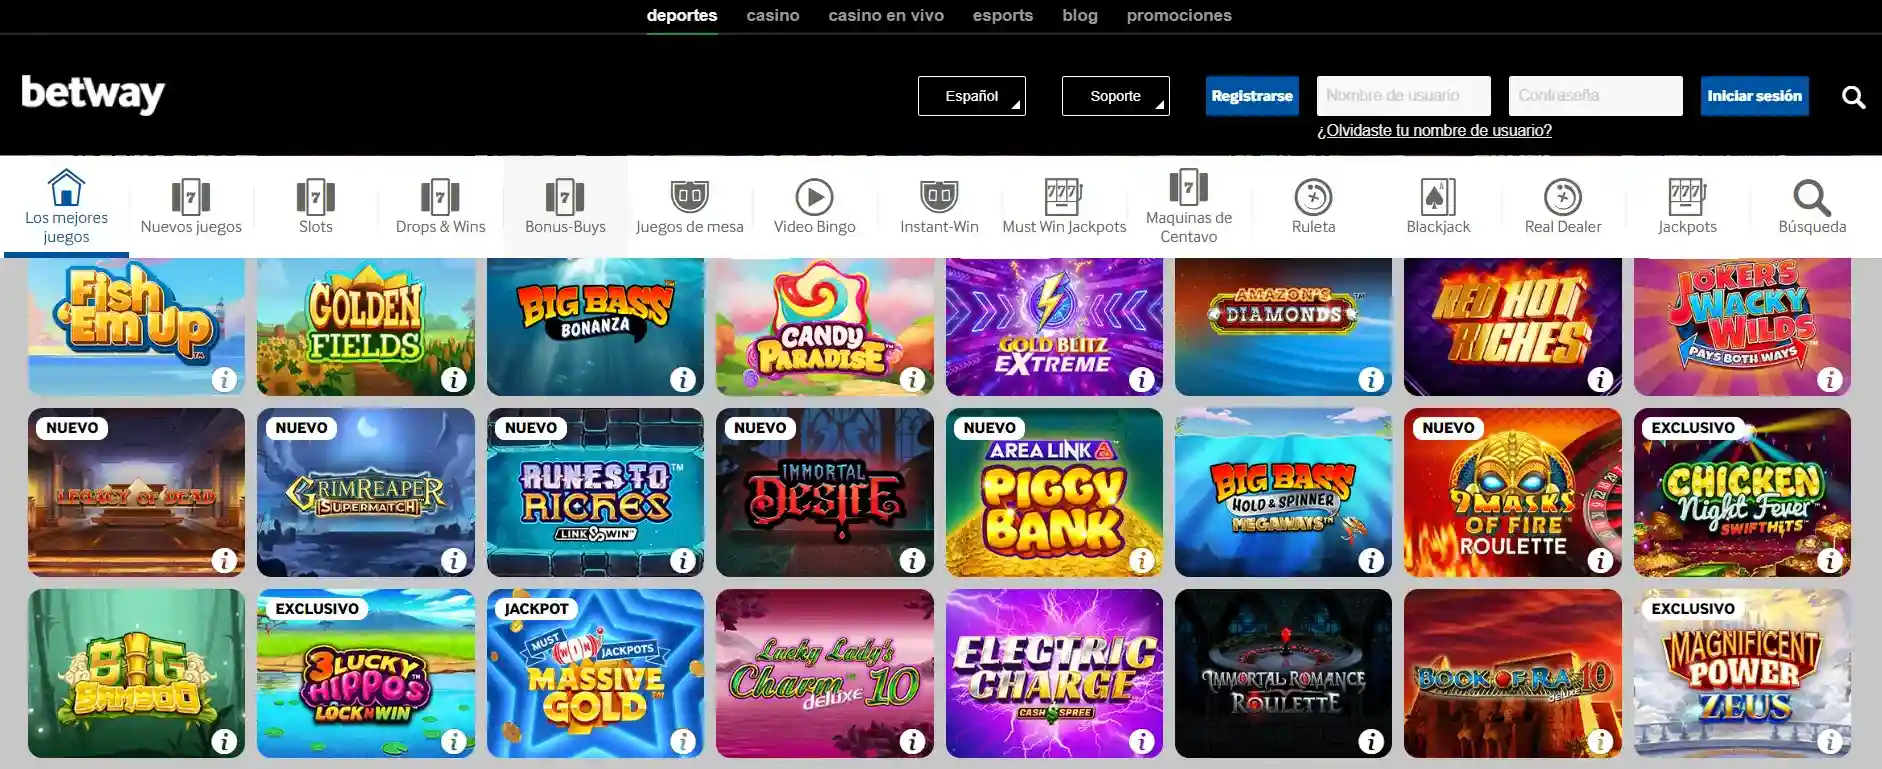 paraguay casinos online betway